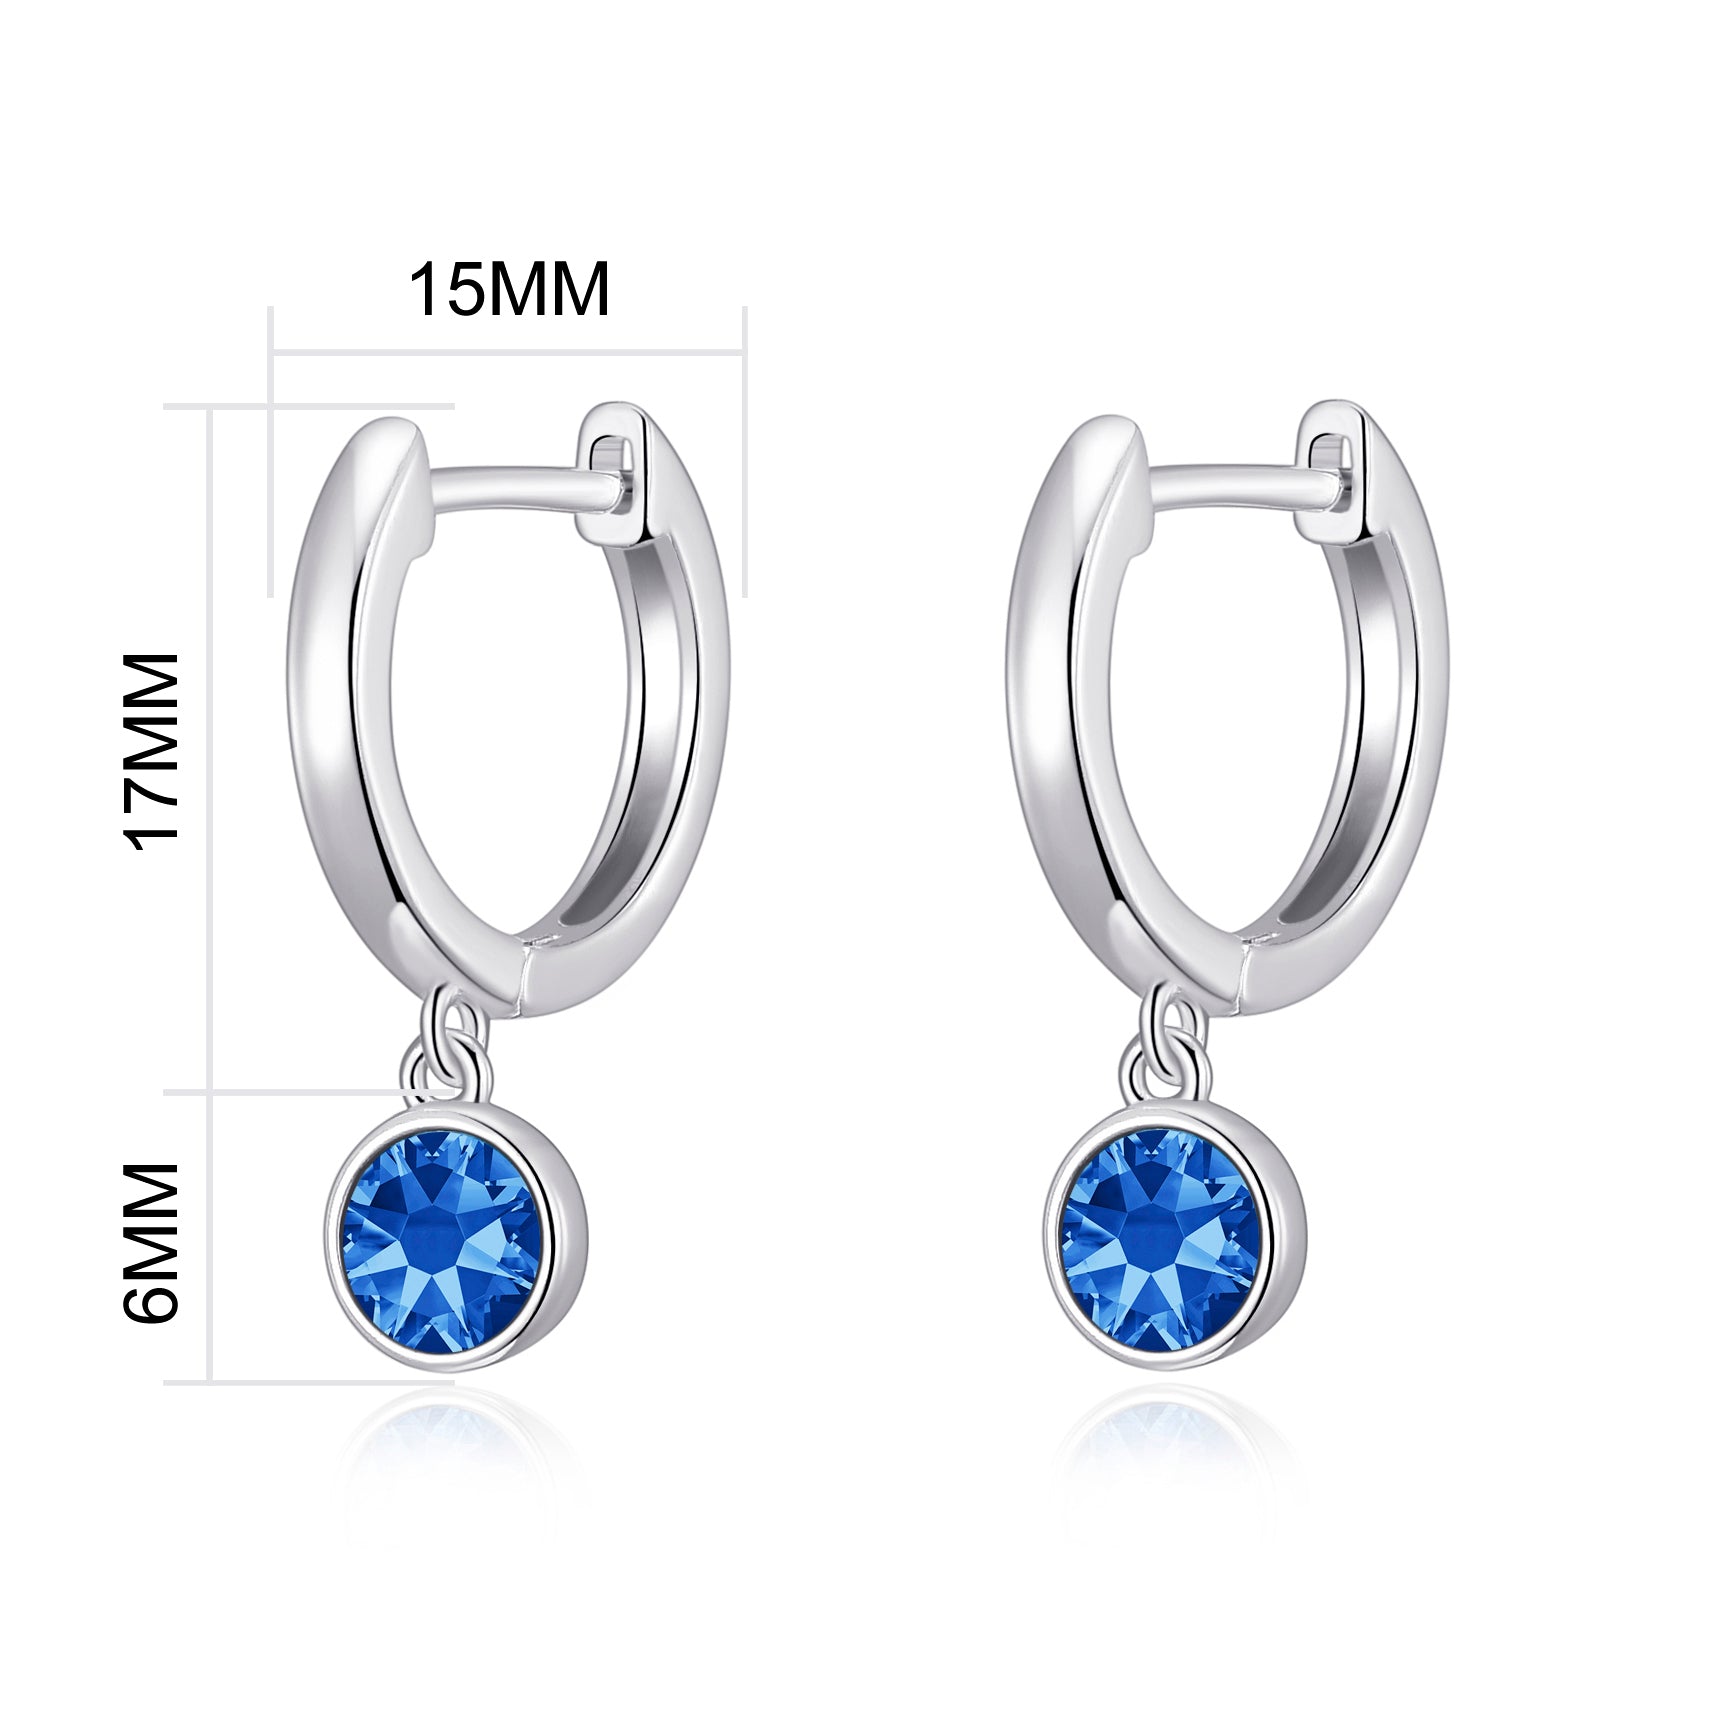 September Birthstone Hoop Earrings Created with Sapphire Zircondia® Crystals